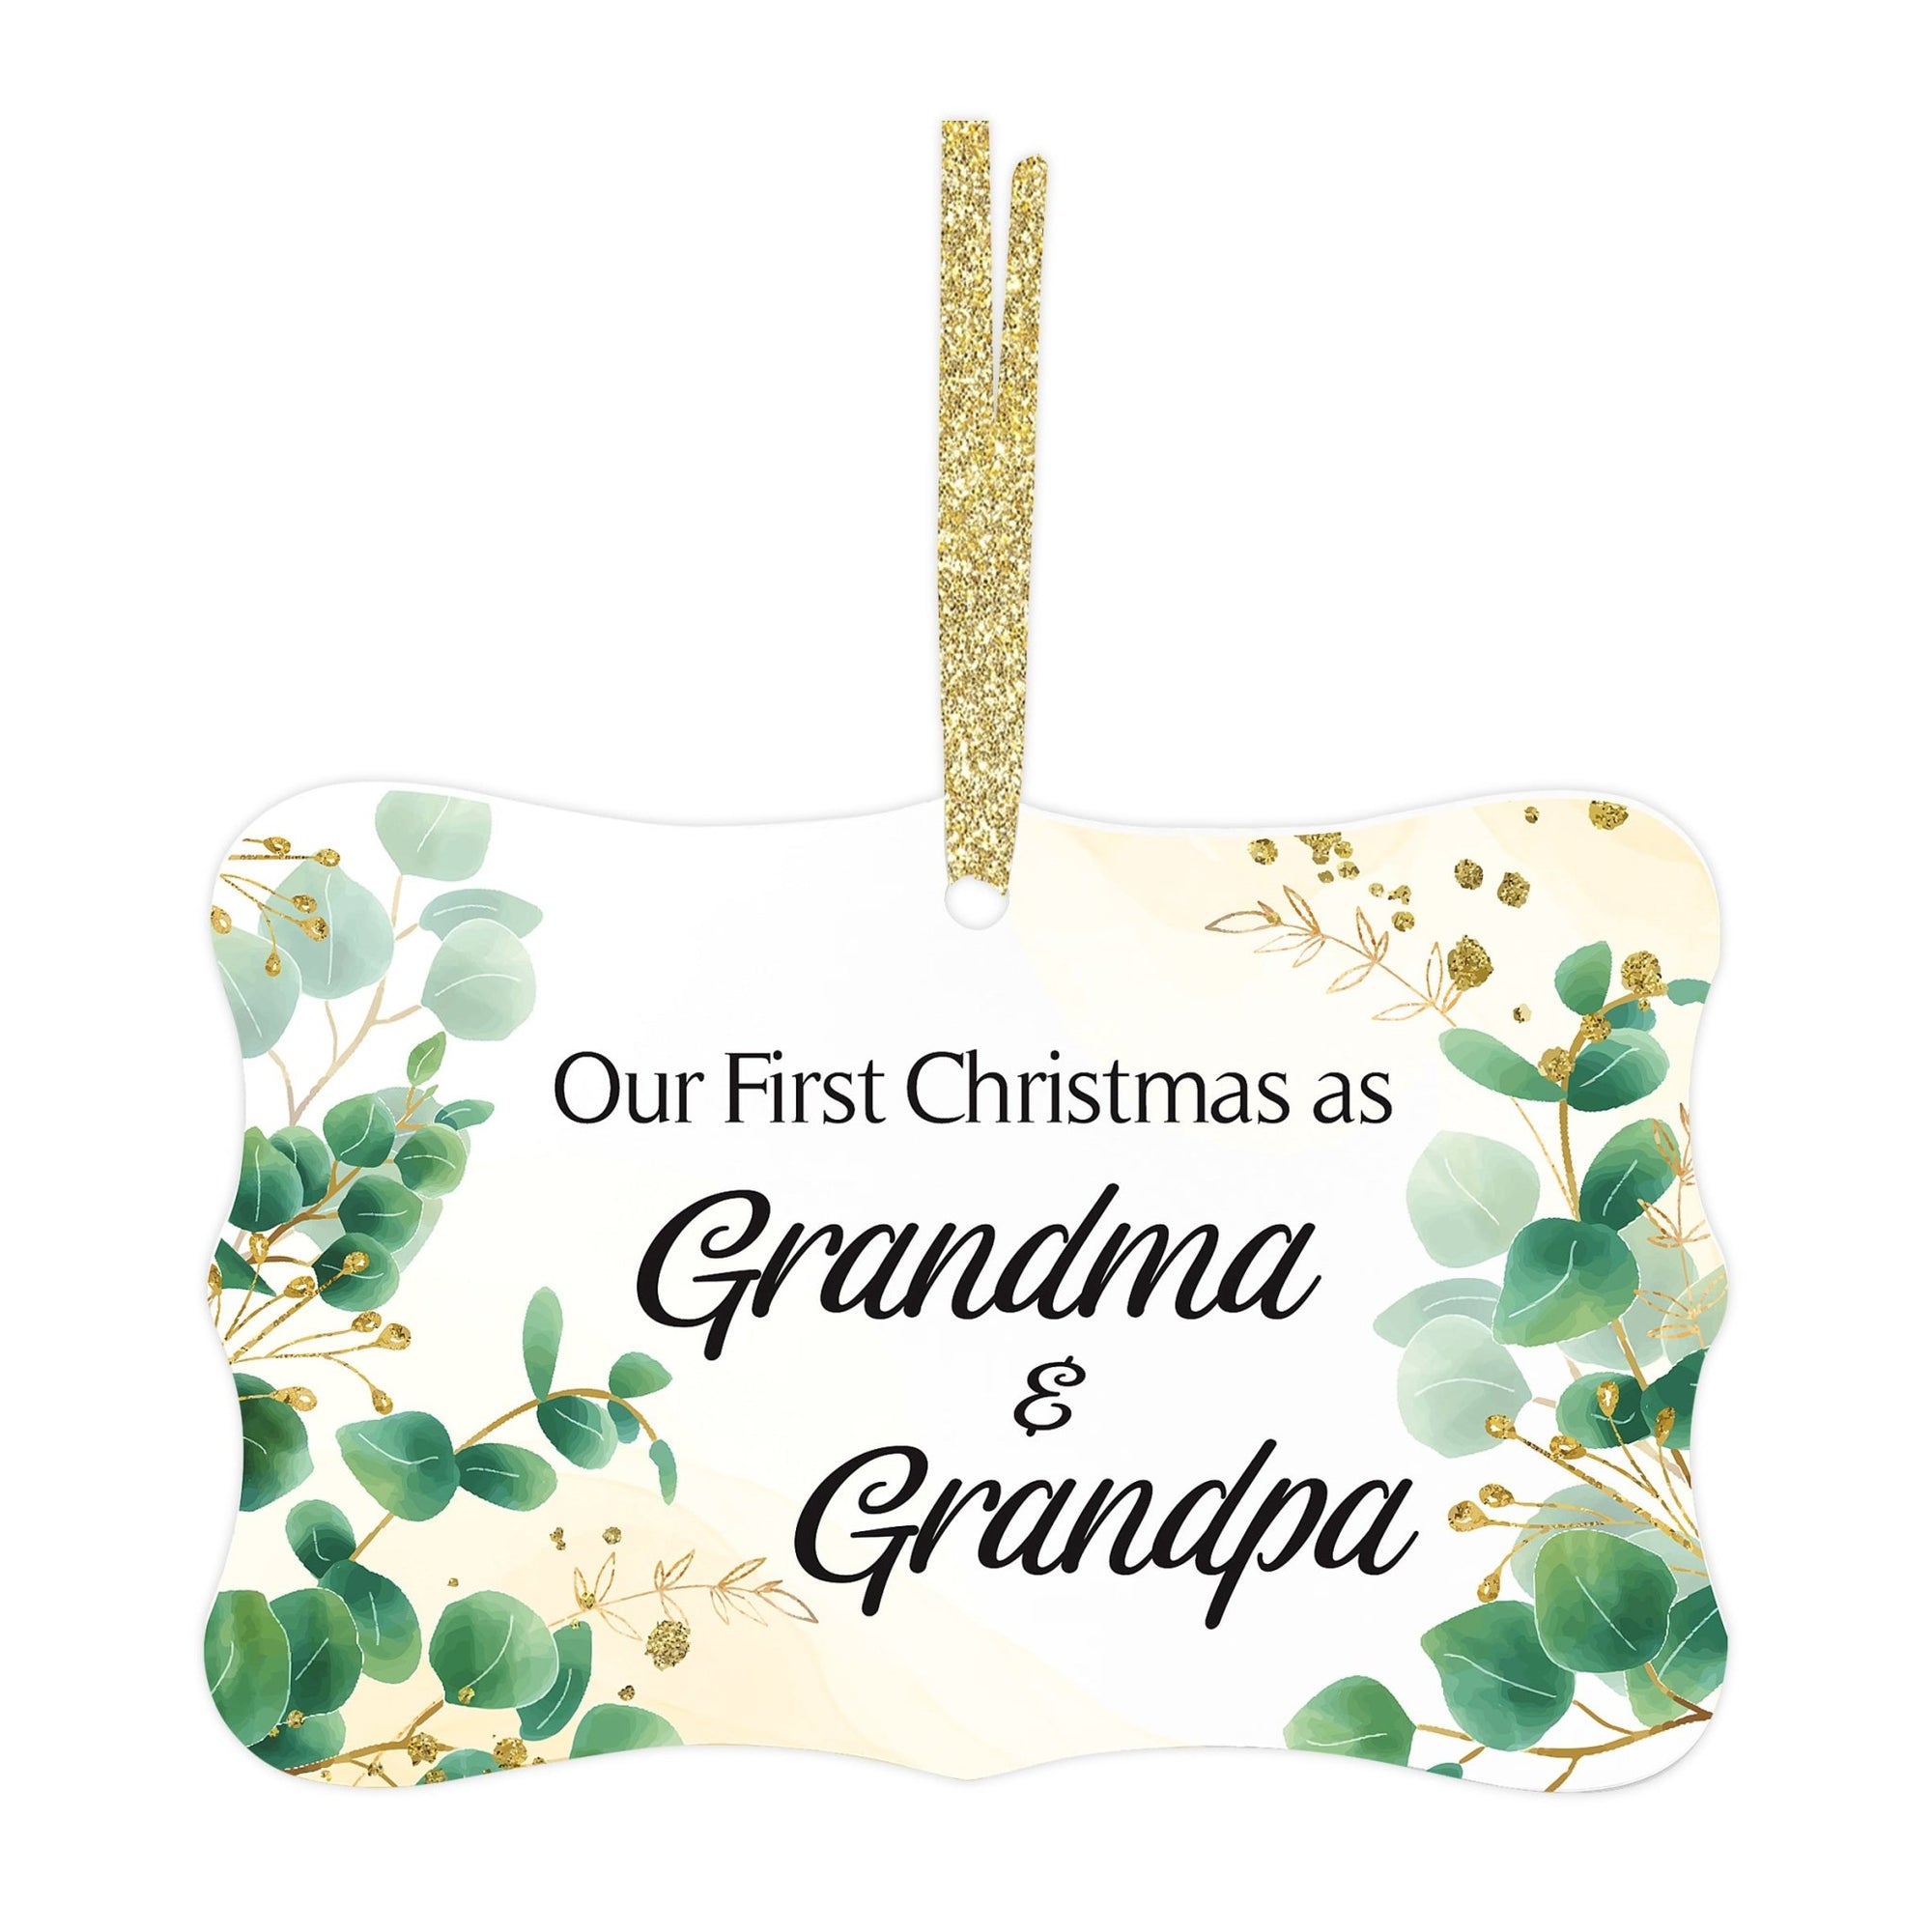 Modern 4x2.5in Christmas White Scalloped Ornament for Grandparents - Grandma & Grandpa - LifeSong Milestones